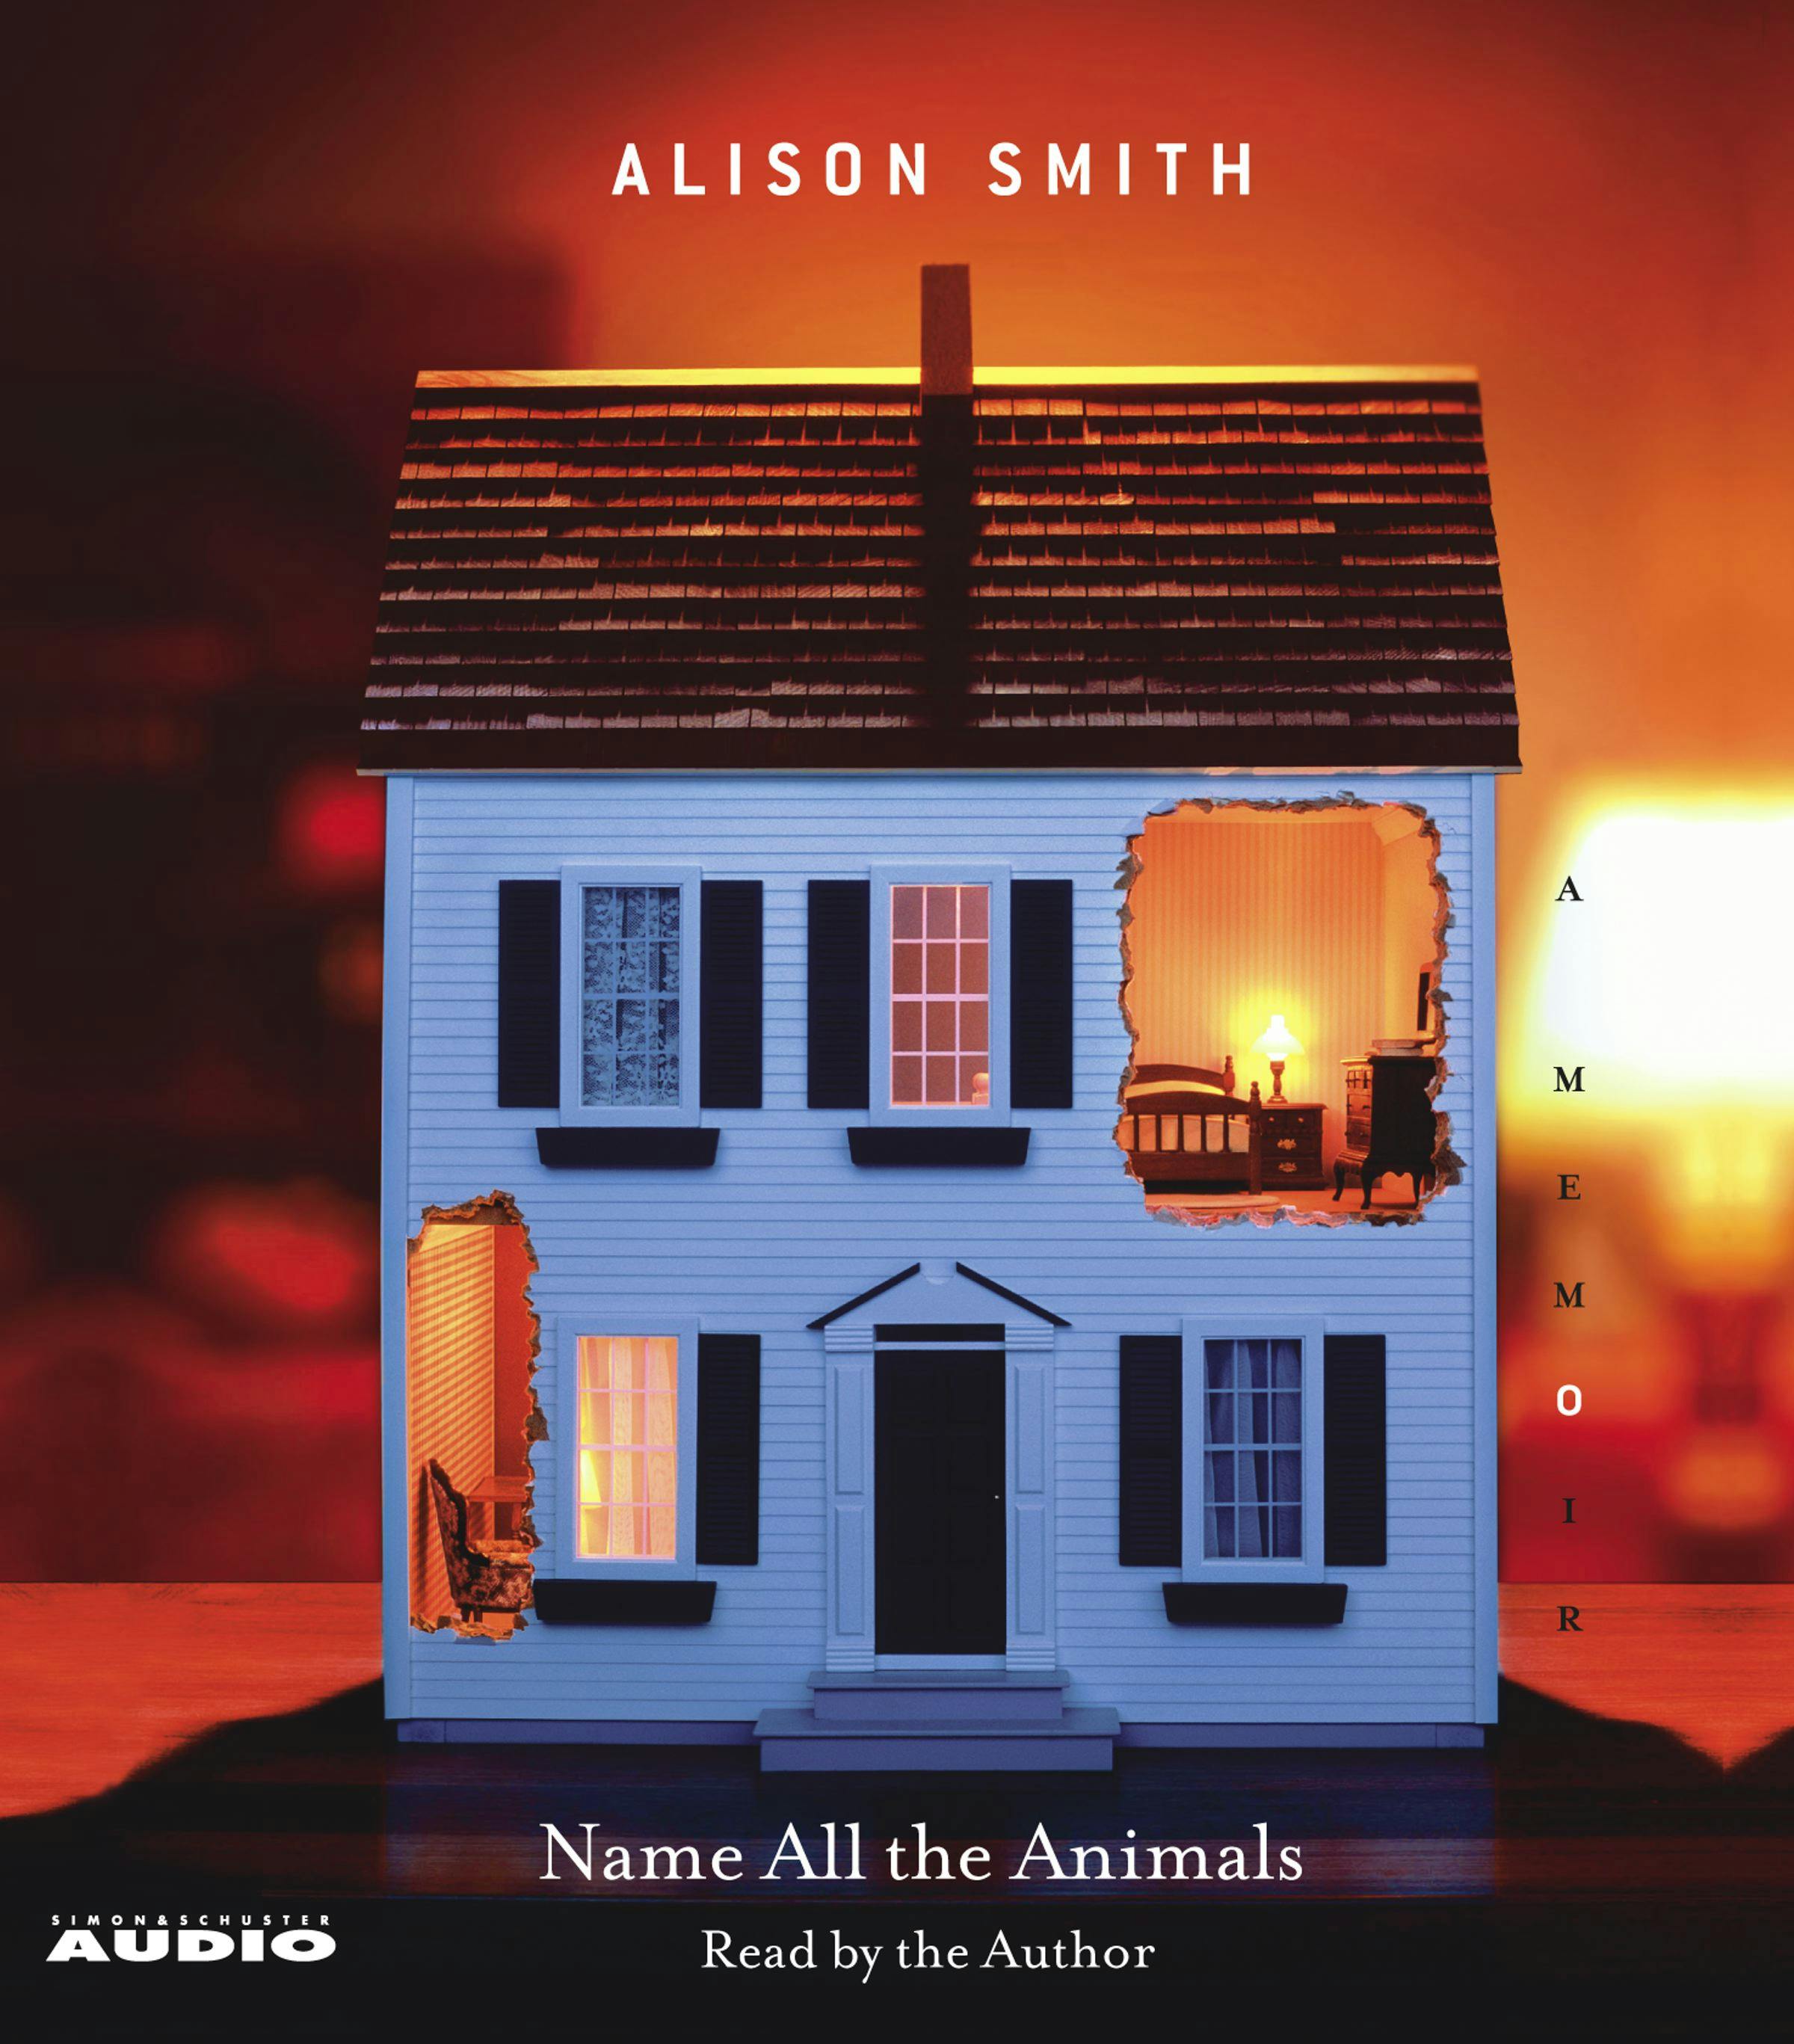 Name All the Animals: A Memoir - Alison Smith